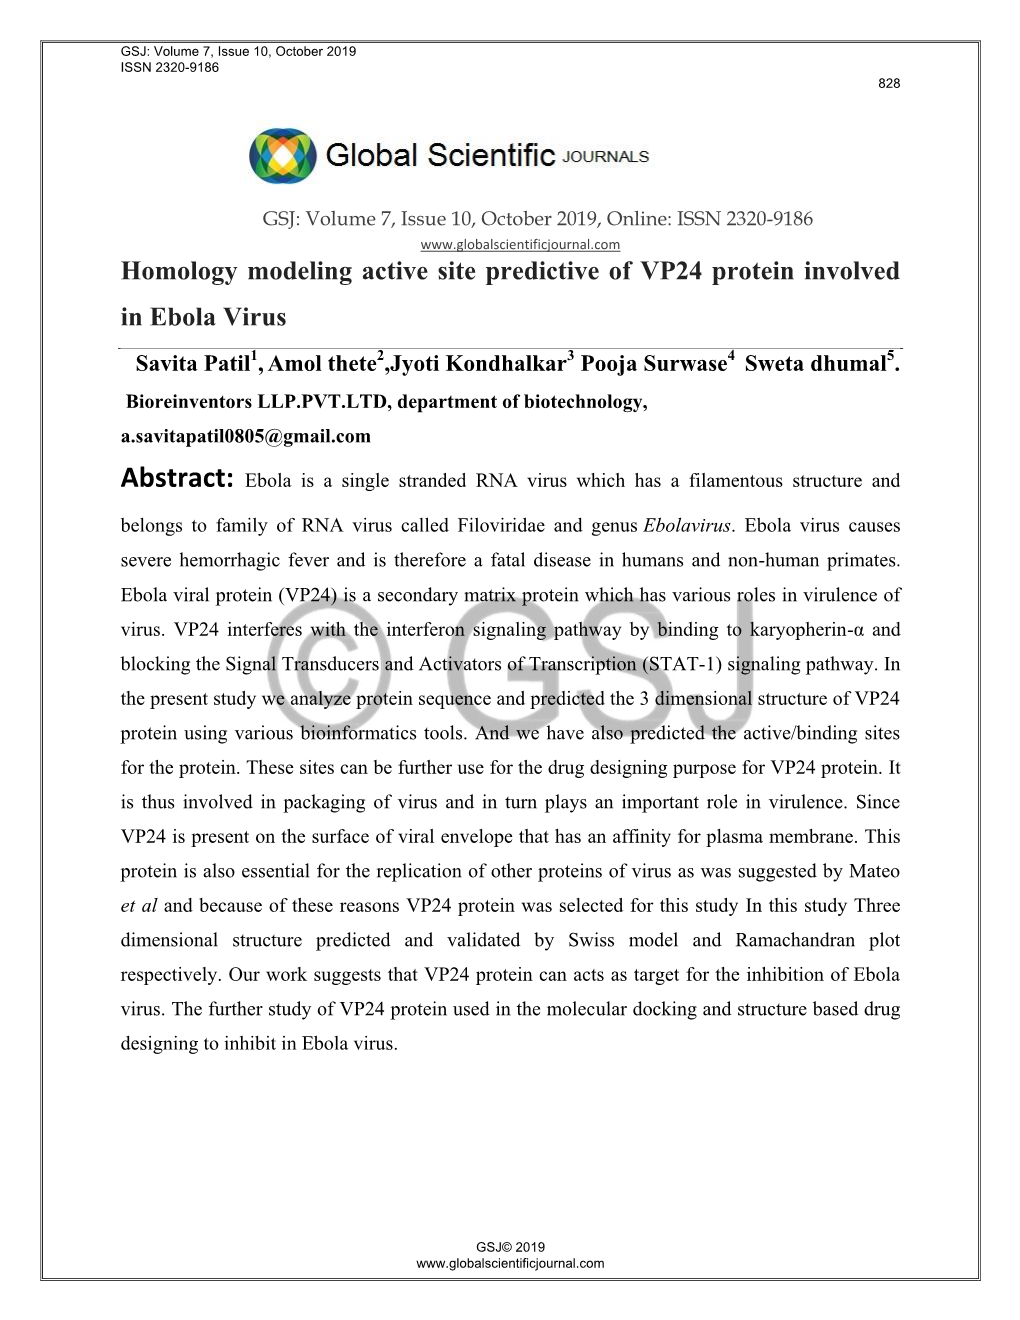 Homology Modeling Active Site Predictive of VP24 Protein Involved in Ebola Virus Savita Patil1, Amol Thete2,Jyoti Kondhalkar3 Pooja Surwase4 Sweta Dhumal5